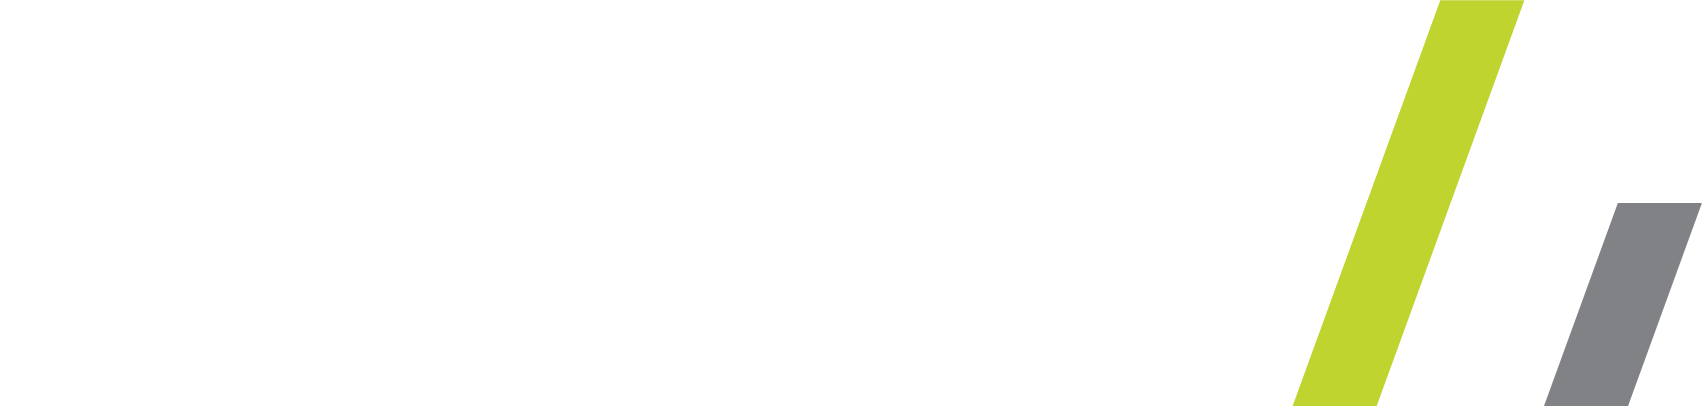 SMD Artemis Product Logo